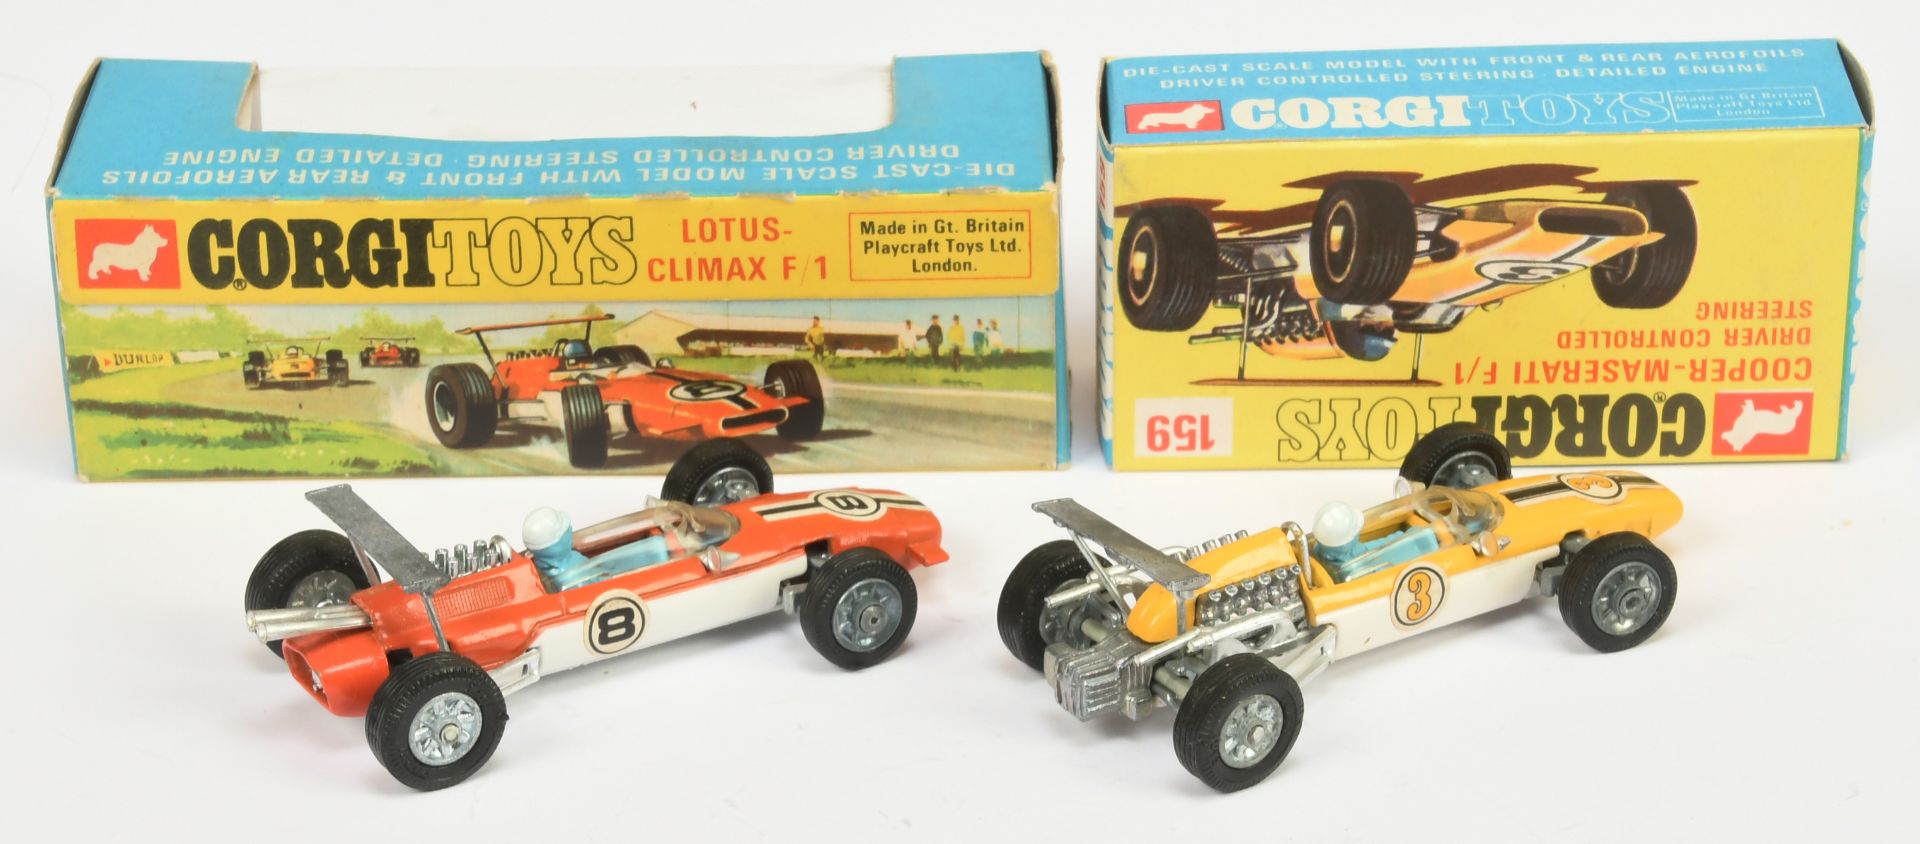 Corgi Toys Formula 1 Racing Cars Group A Pair - (1) 158 Lotus-Climax - Orange and white, cast hub... - Bild 2 aus 2